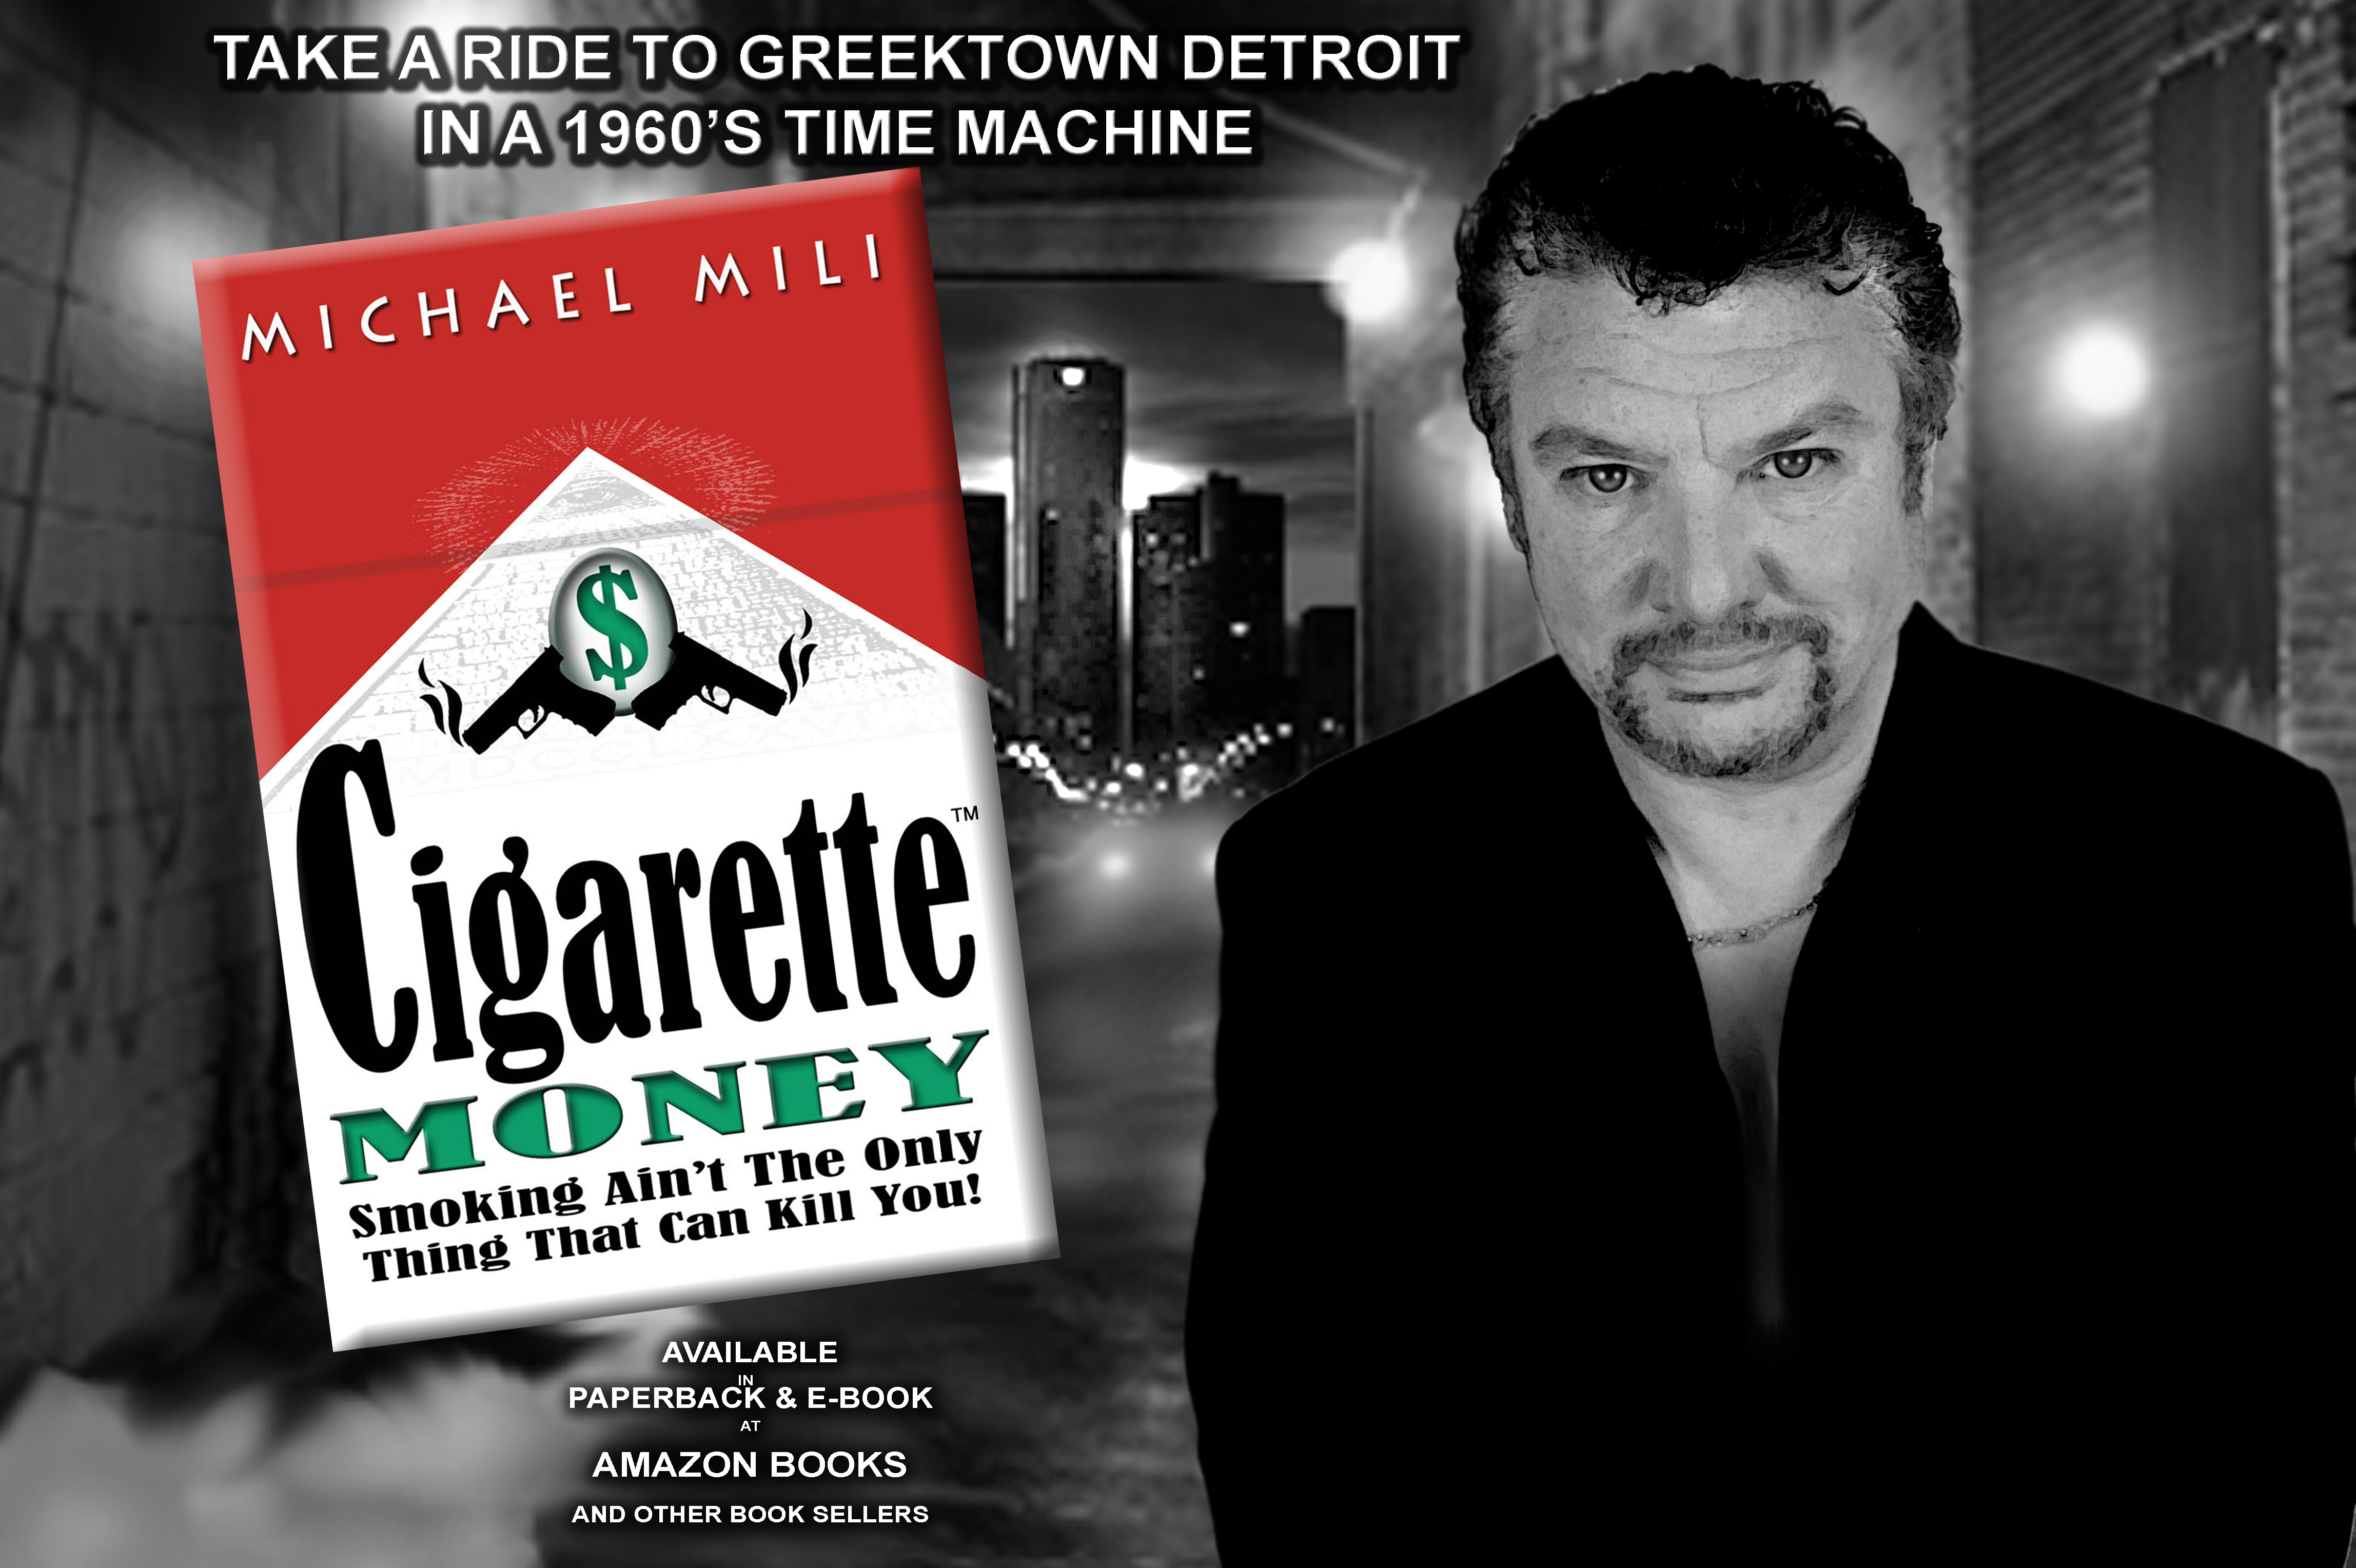 Promo poster for Cigarette Money a Michael Mili Story.